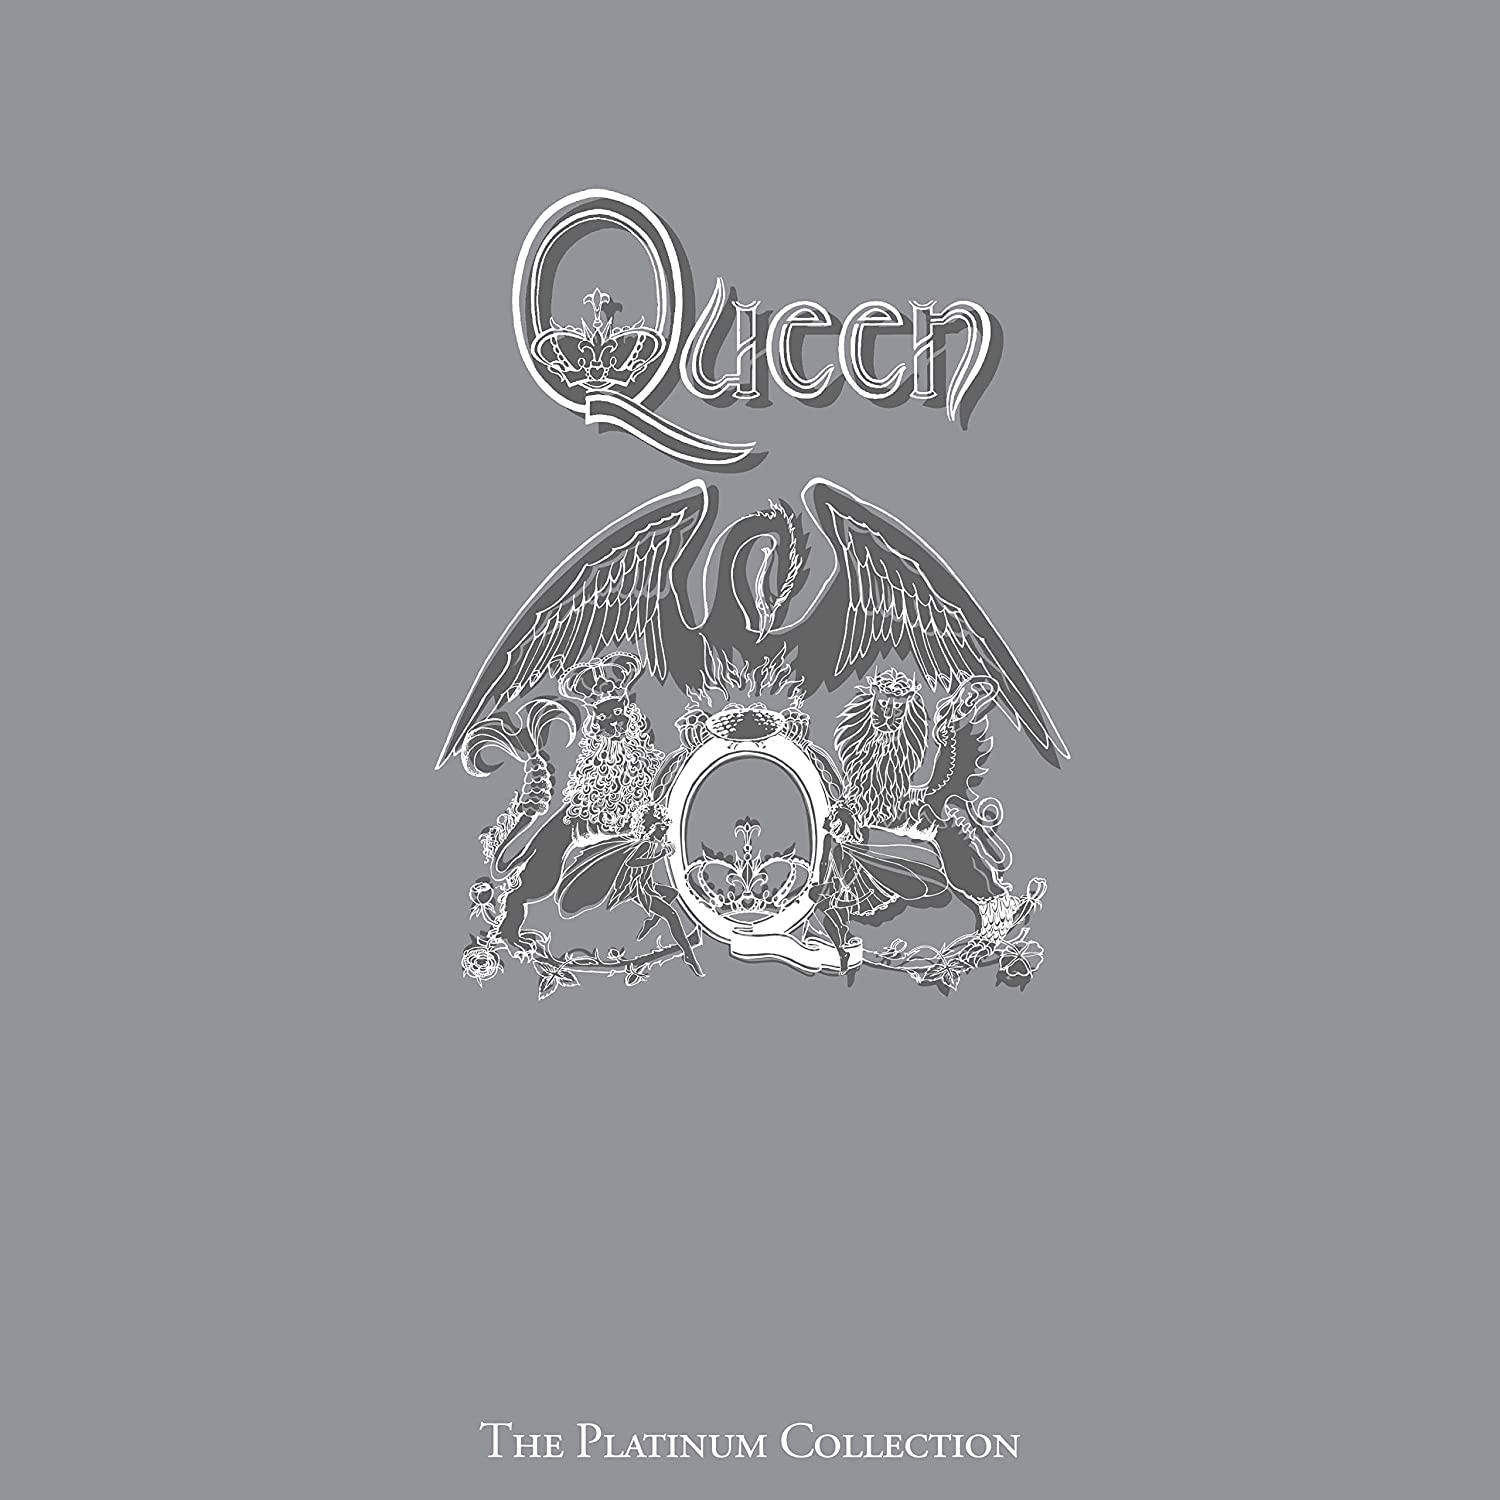 Queen / The Platinum Collection 6LP coloured vinyl box set –  SuperDeluxeEdition